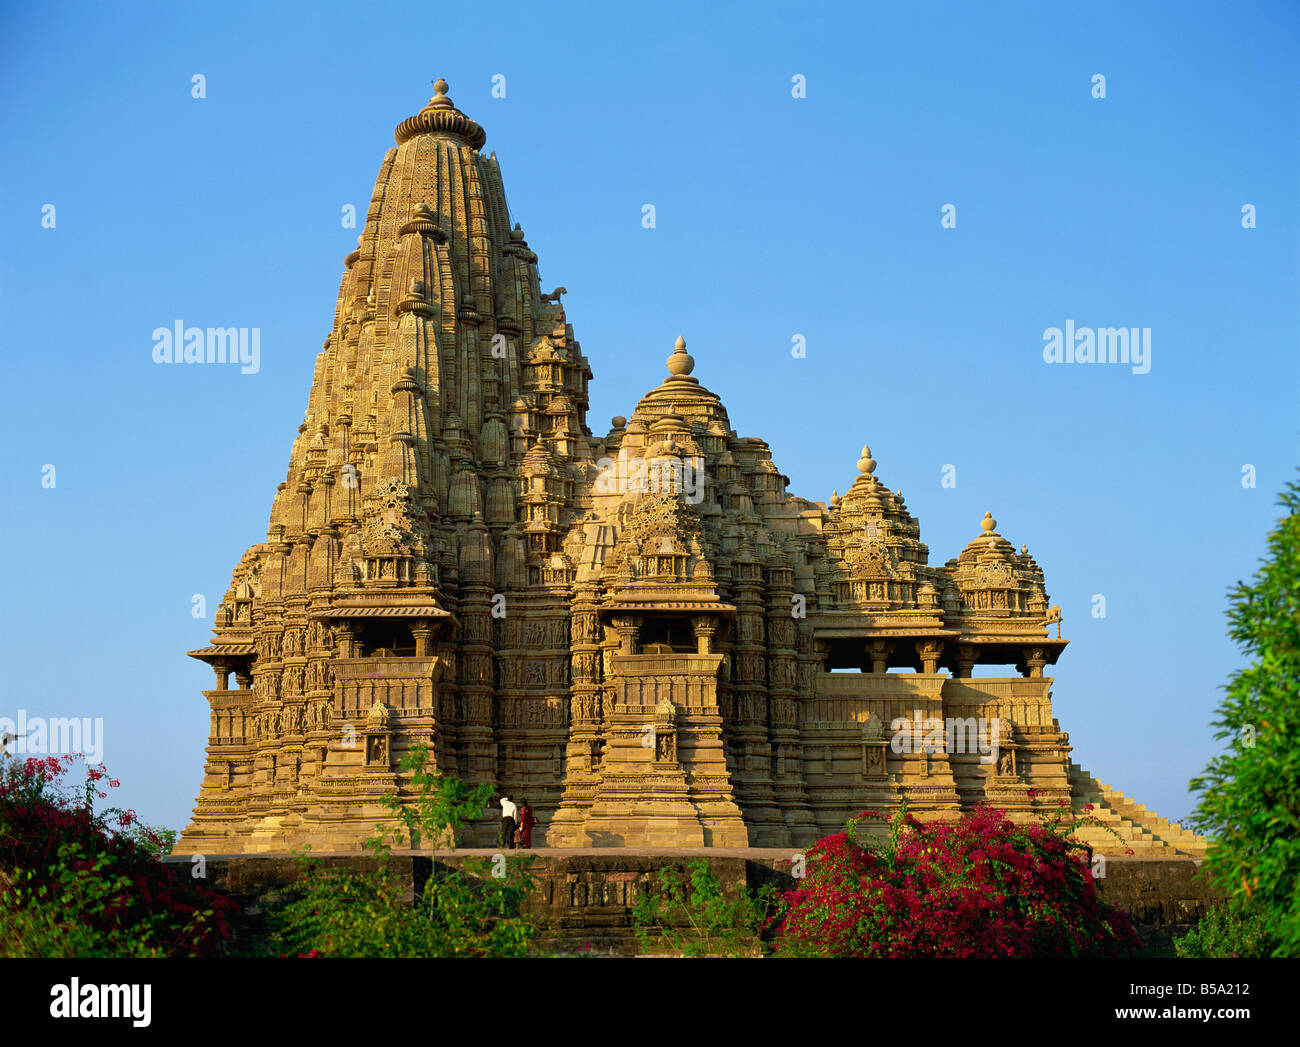 Kandariya Mahadev Temple Western Group Khajuraho UNESCO World Heritage Site Madhya Pradesh state India Asia Stock Photo